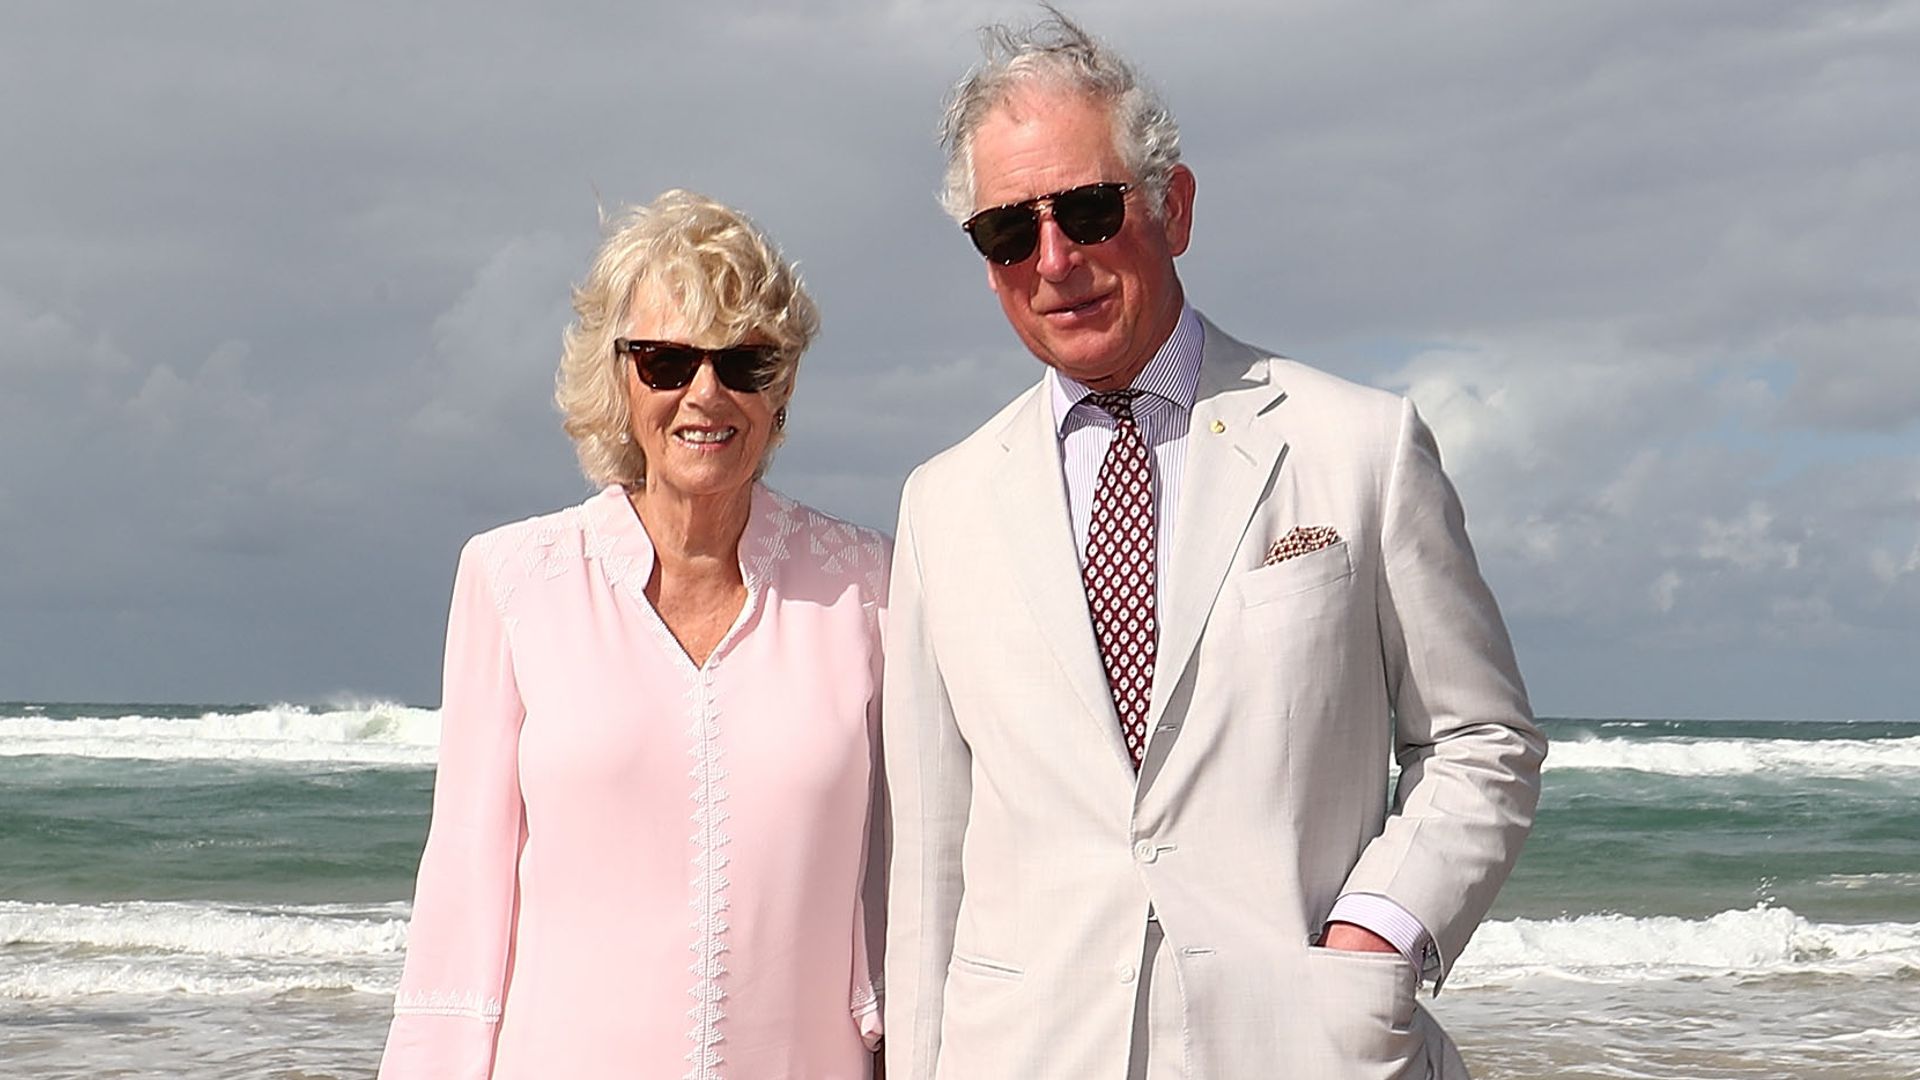 Charles and Camilla on Broadbeach, Australia in 2018